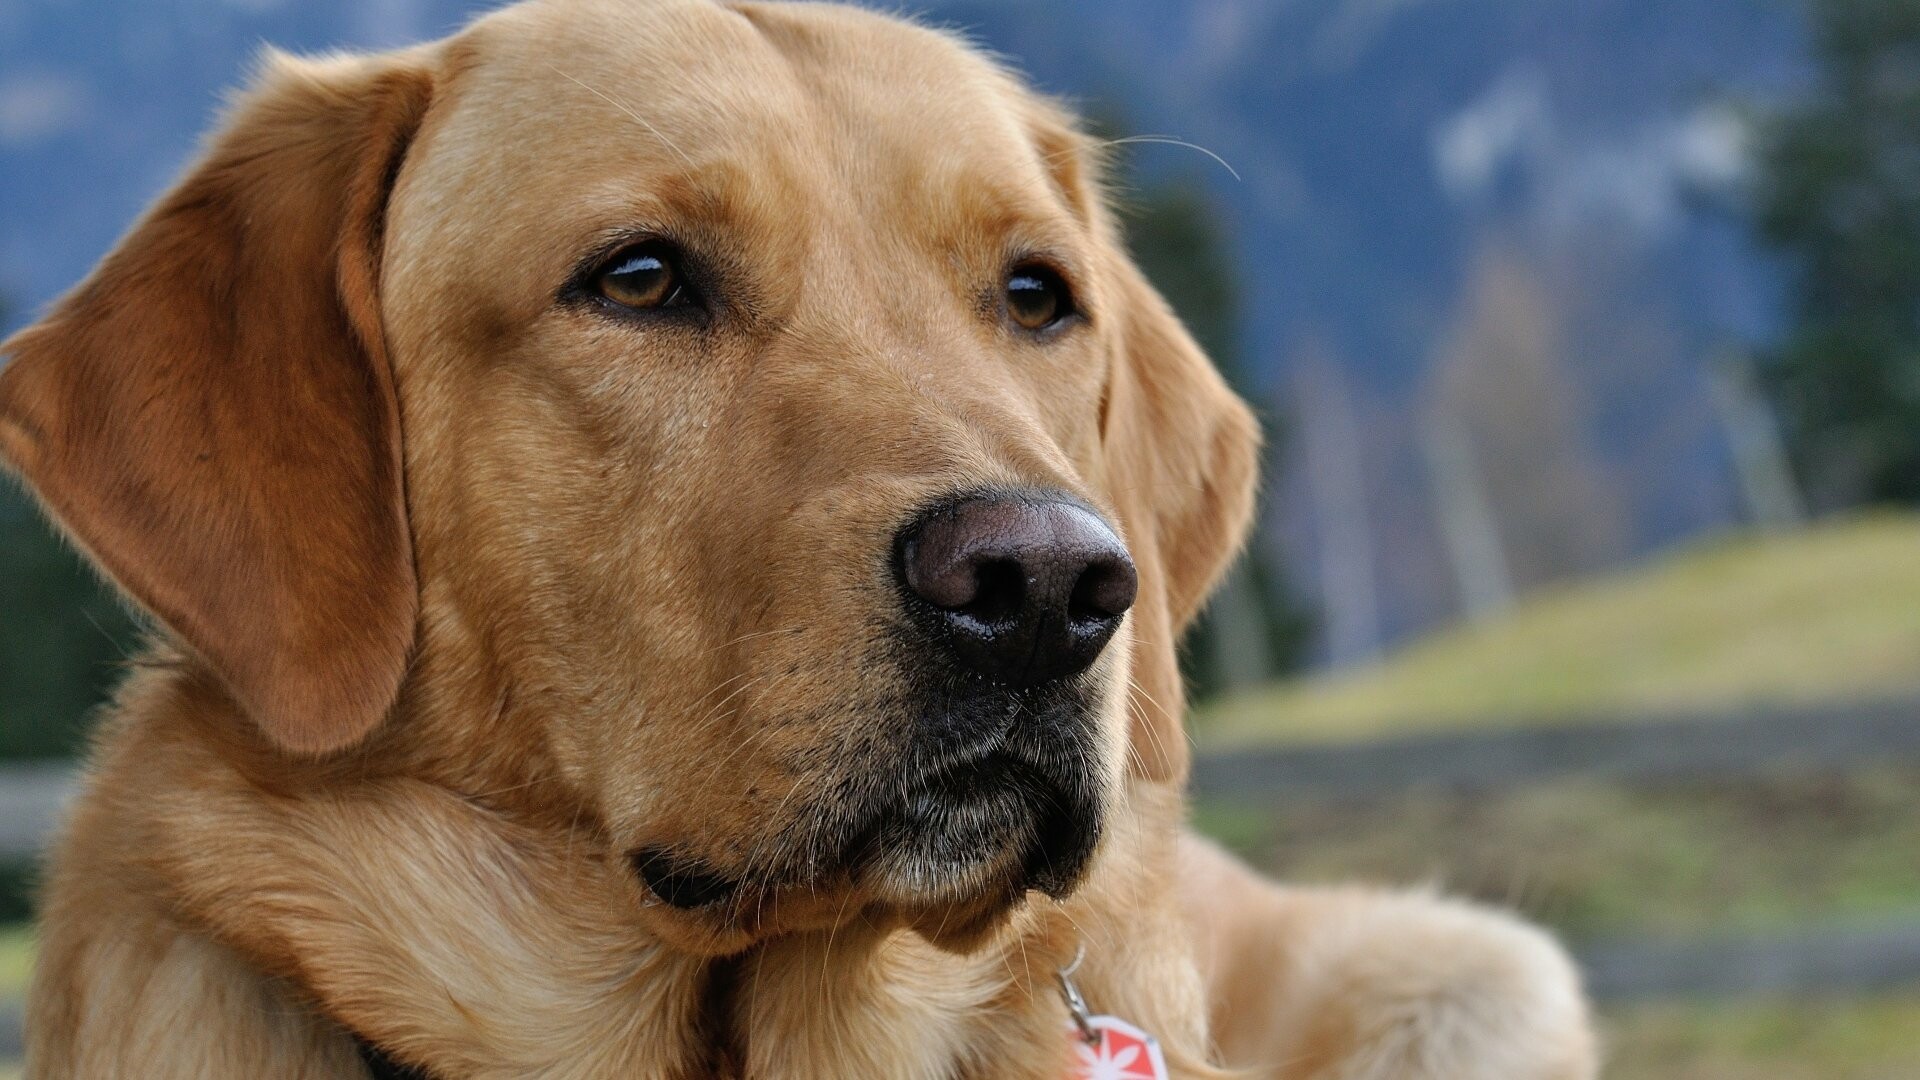 Dog: Most popular domestic animals in the world, Labrador Retriever. 1920x1080 Full HD Wallpaper.